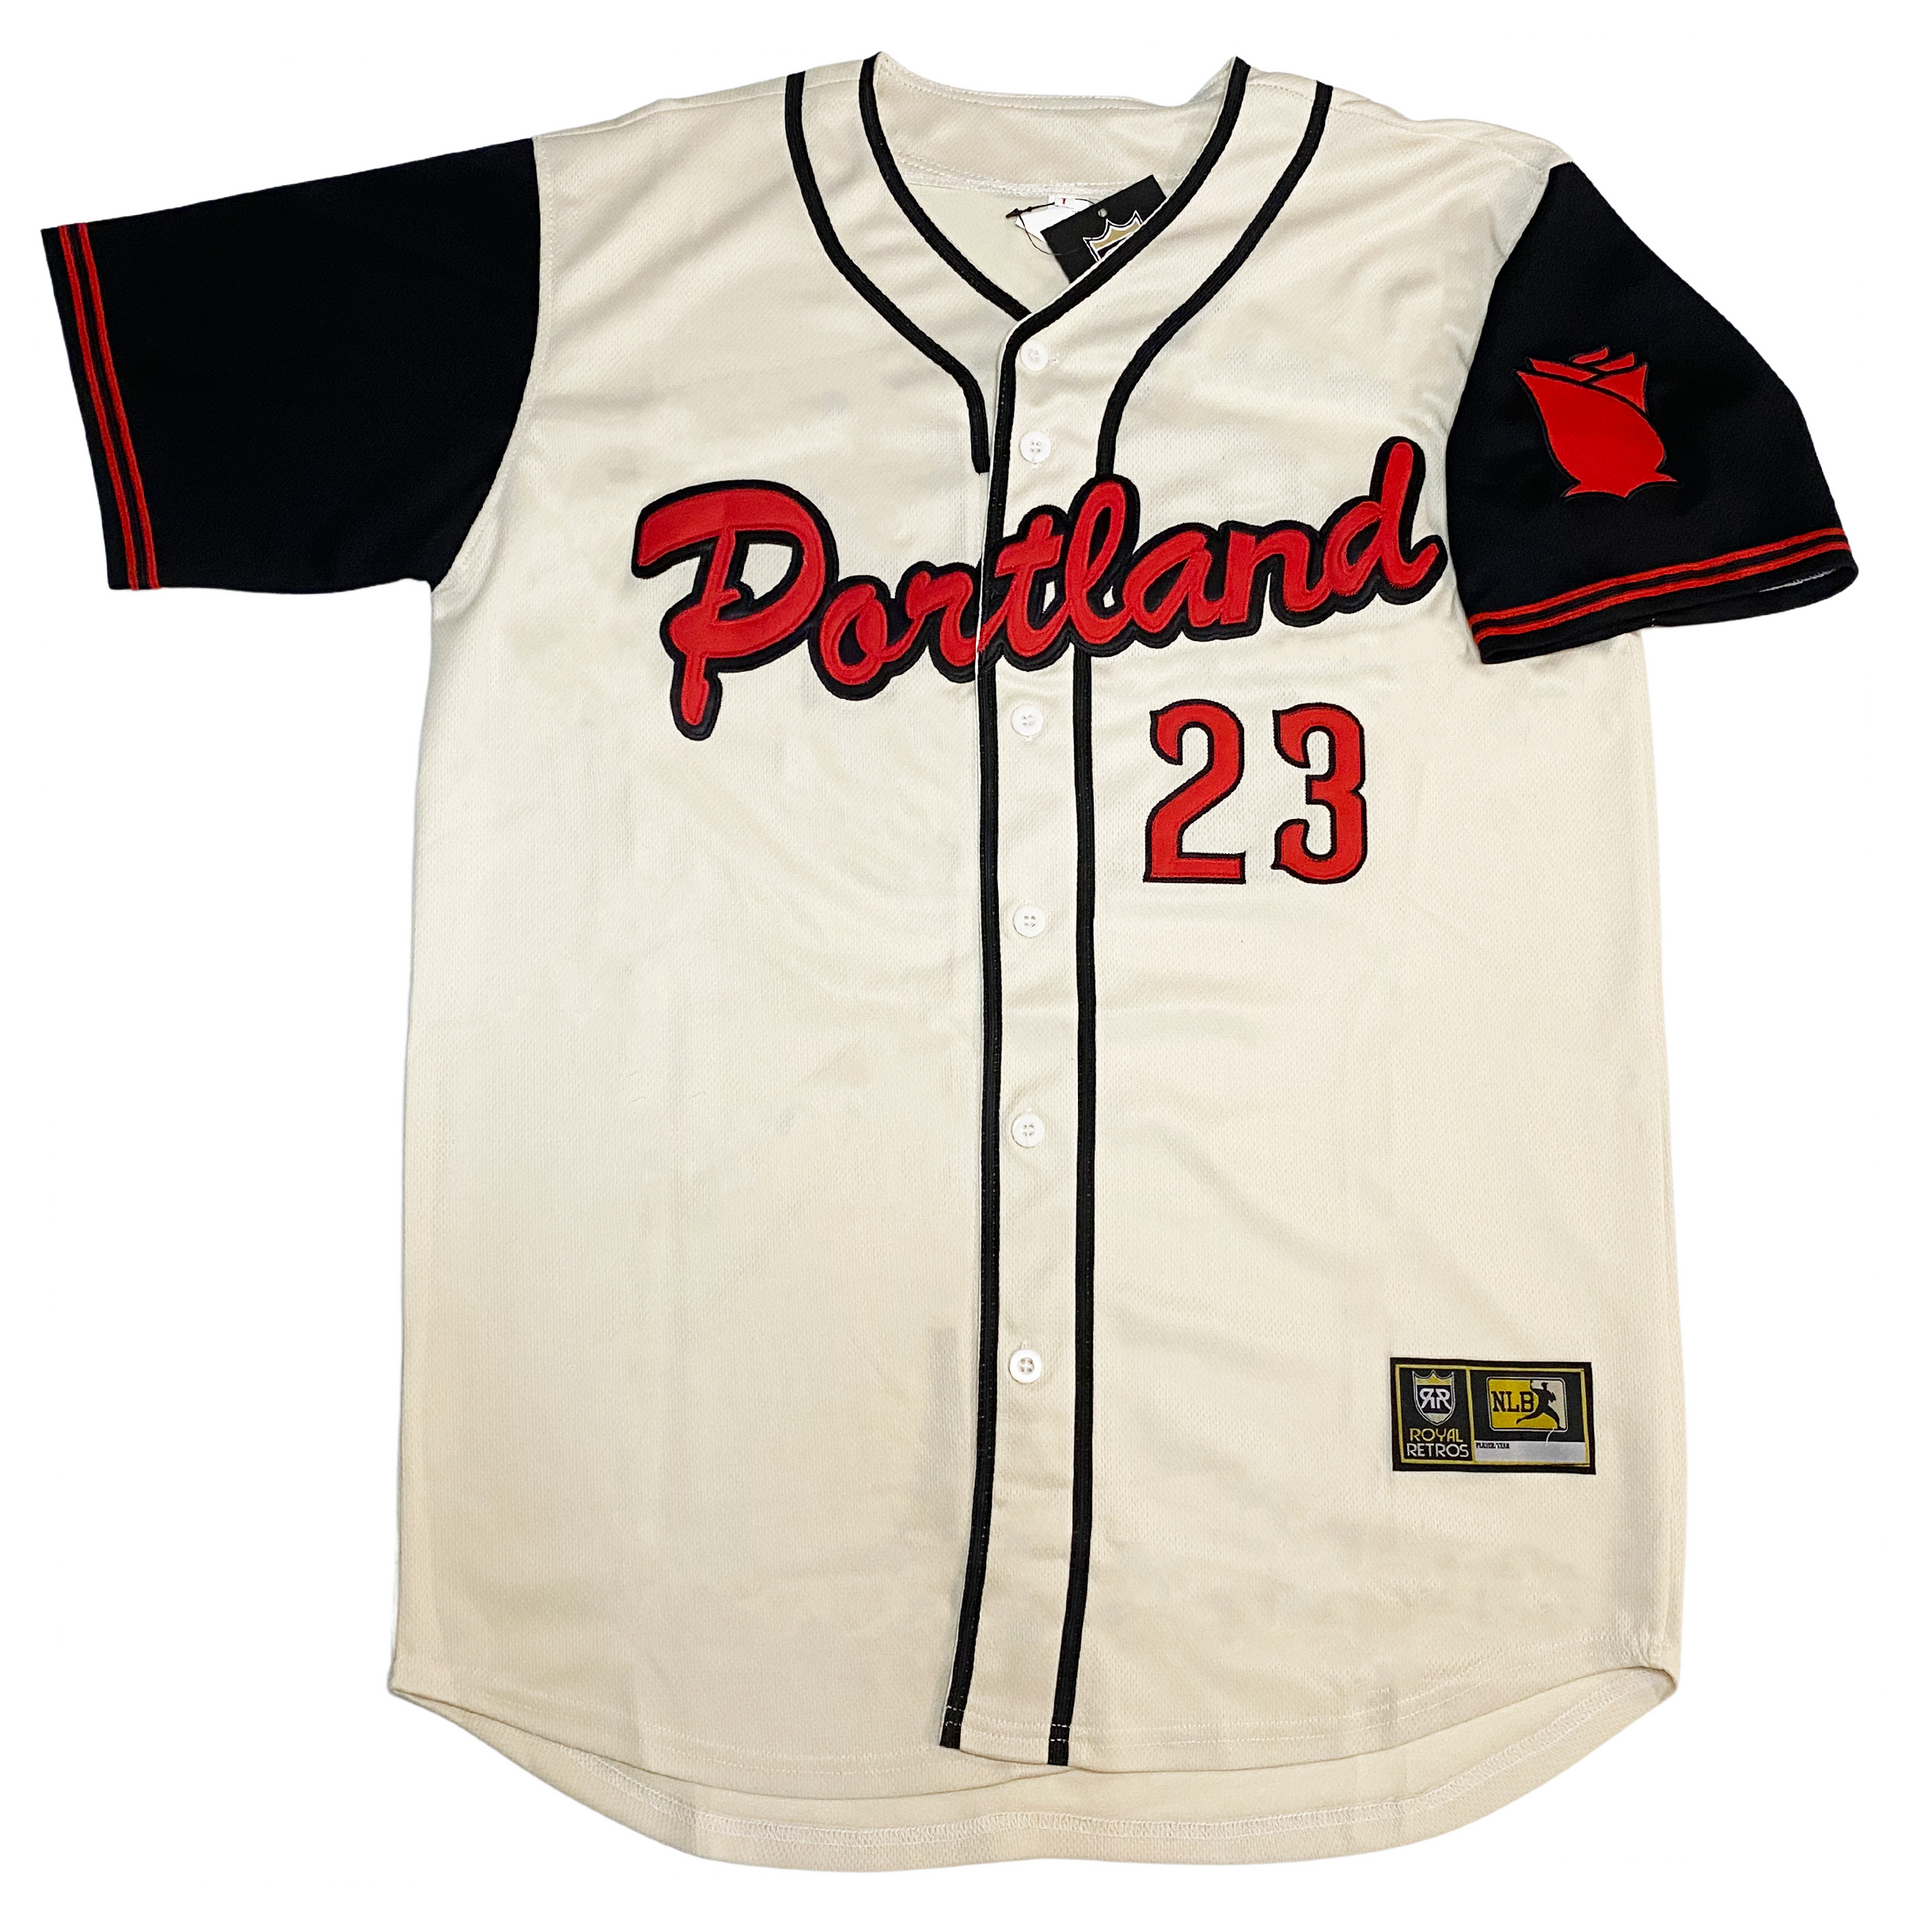 New Orleans Pelicans Baseball Jersey - Cream - 5XL - Royal Retros